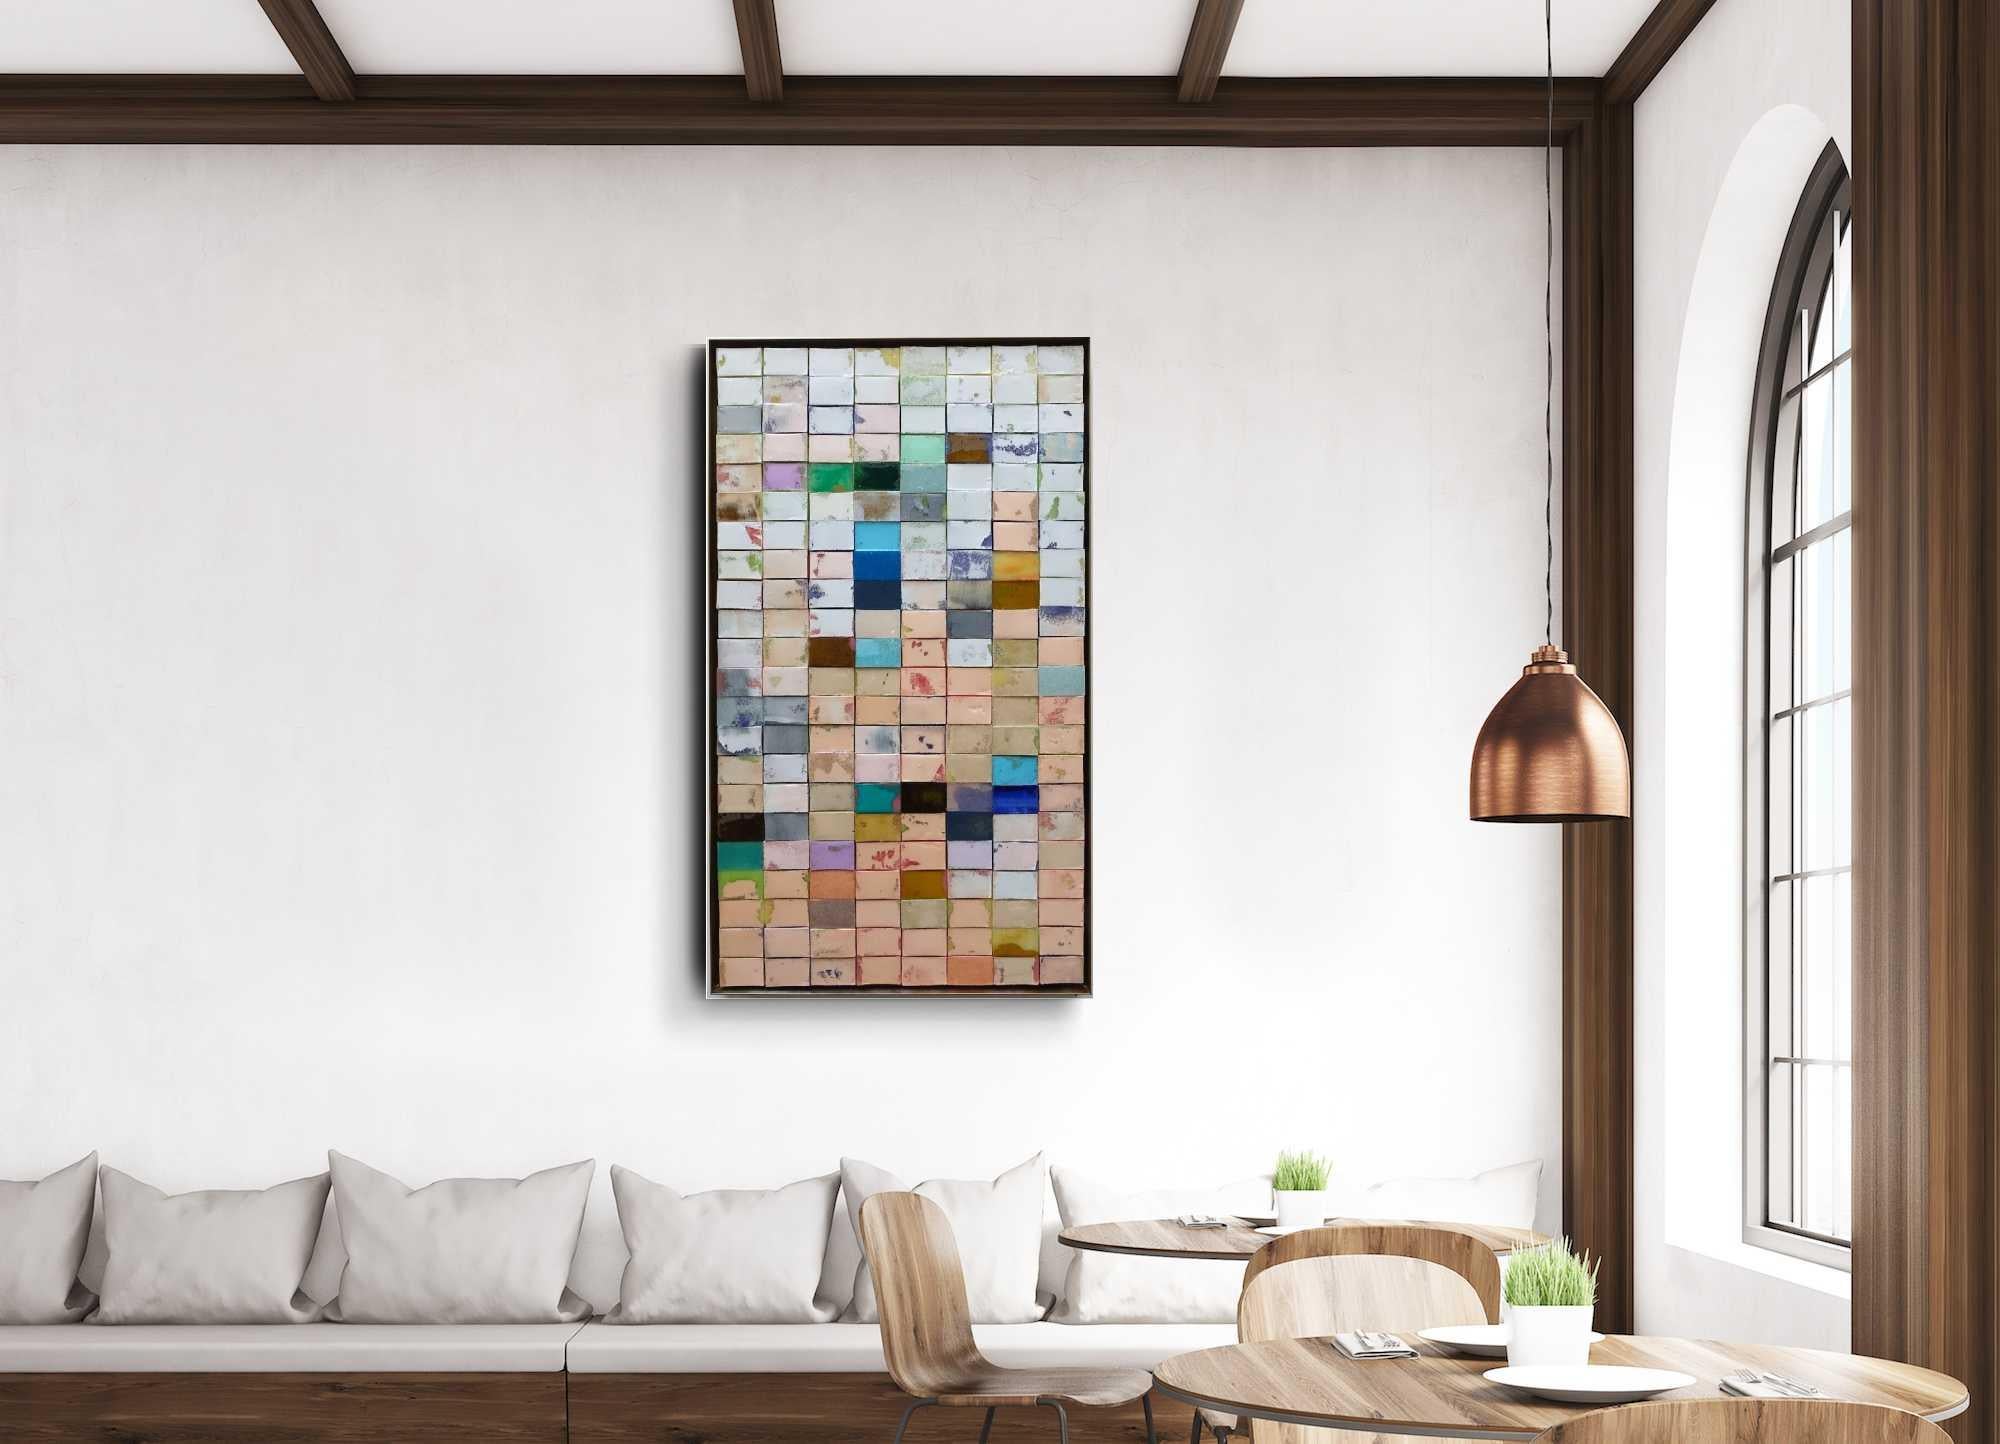 Mosaik 1306 - Contemporary, Abstract art, Acrylic, Resin, Colourful, 21st C - Abstract Geometric Mixed Media Art by Fahar Al-salih